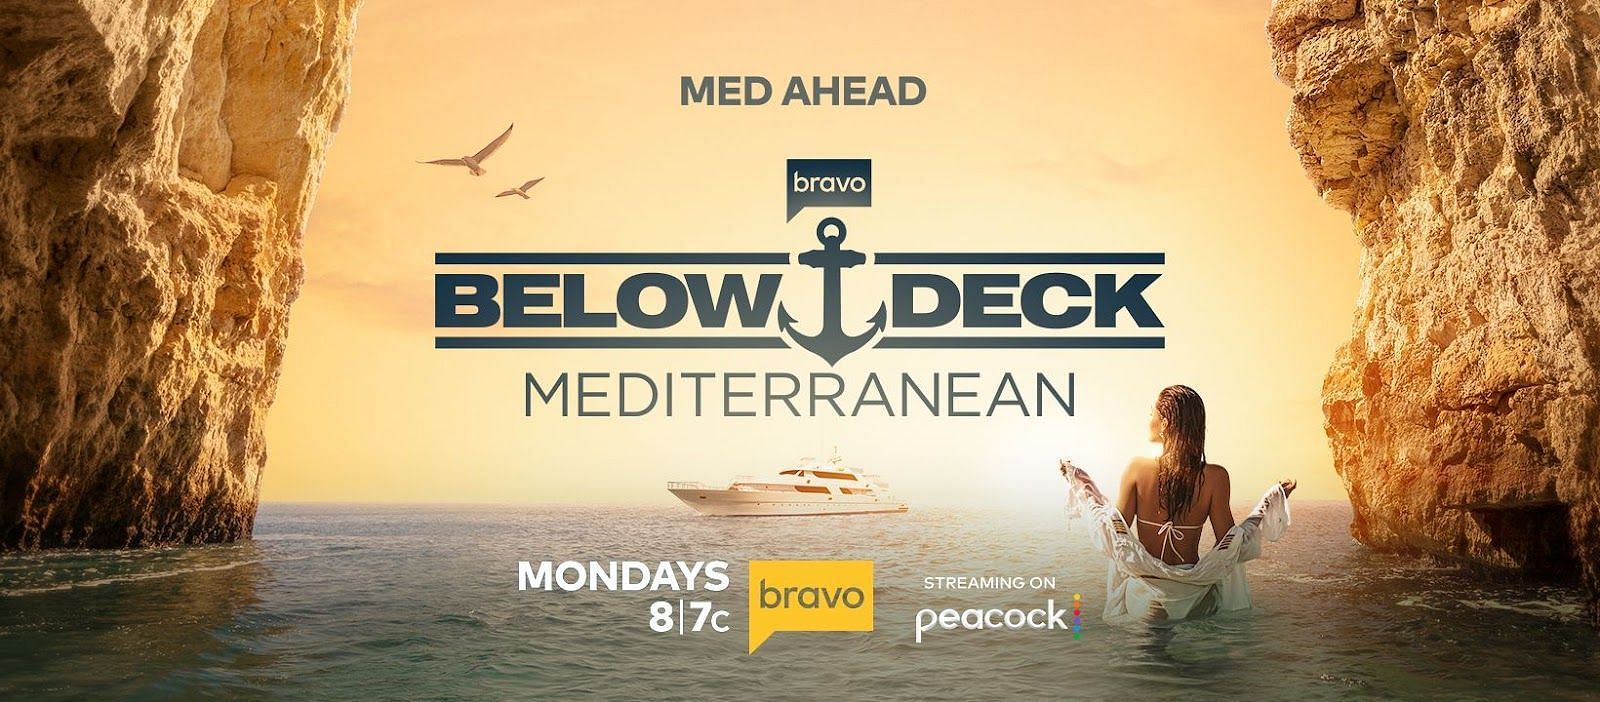 Below Deck Mediterranean season 7 cast